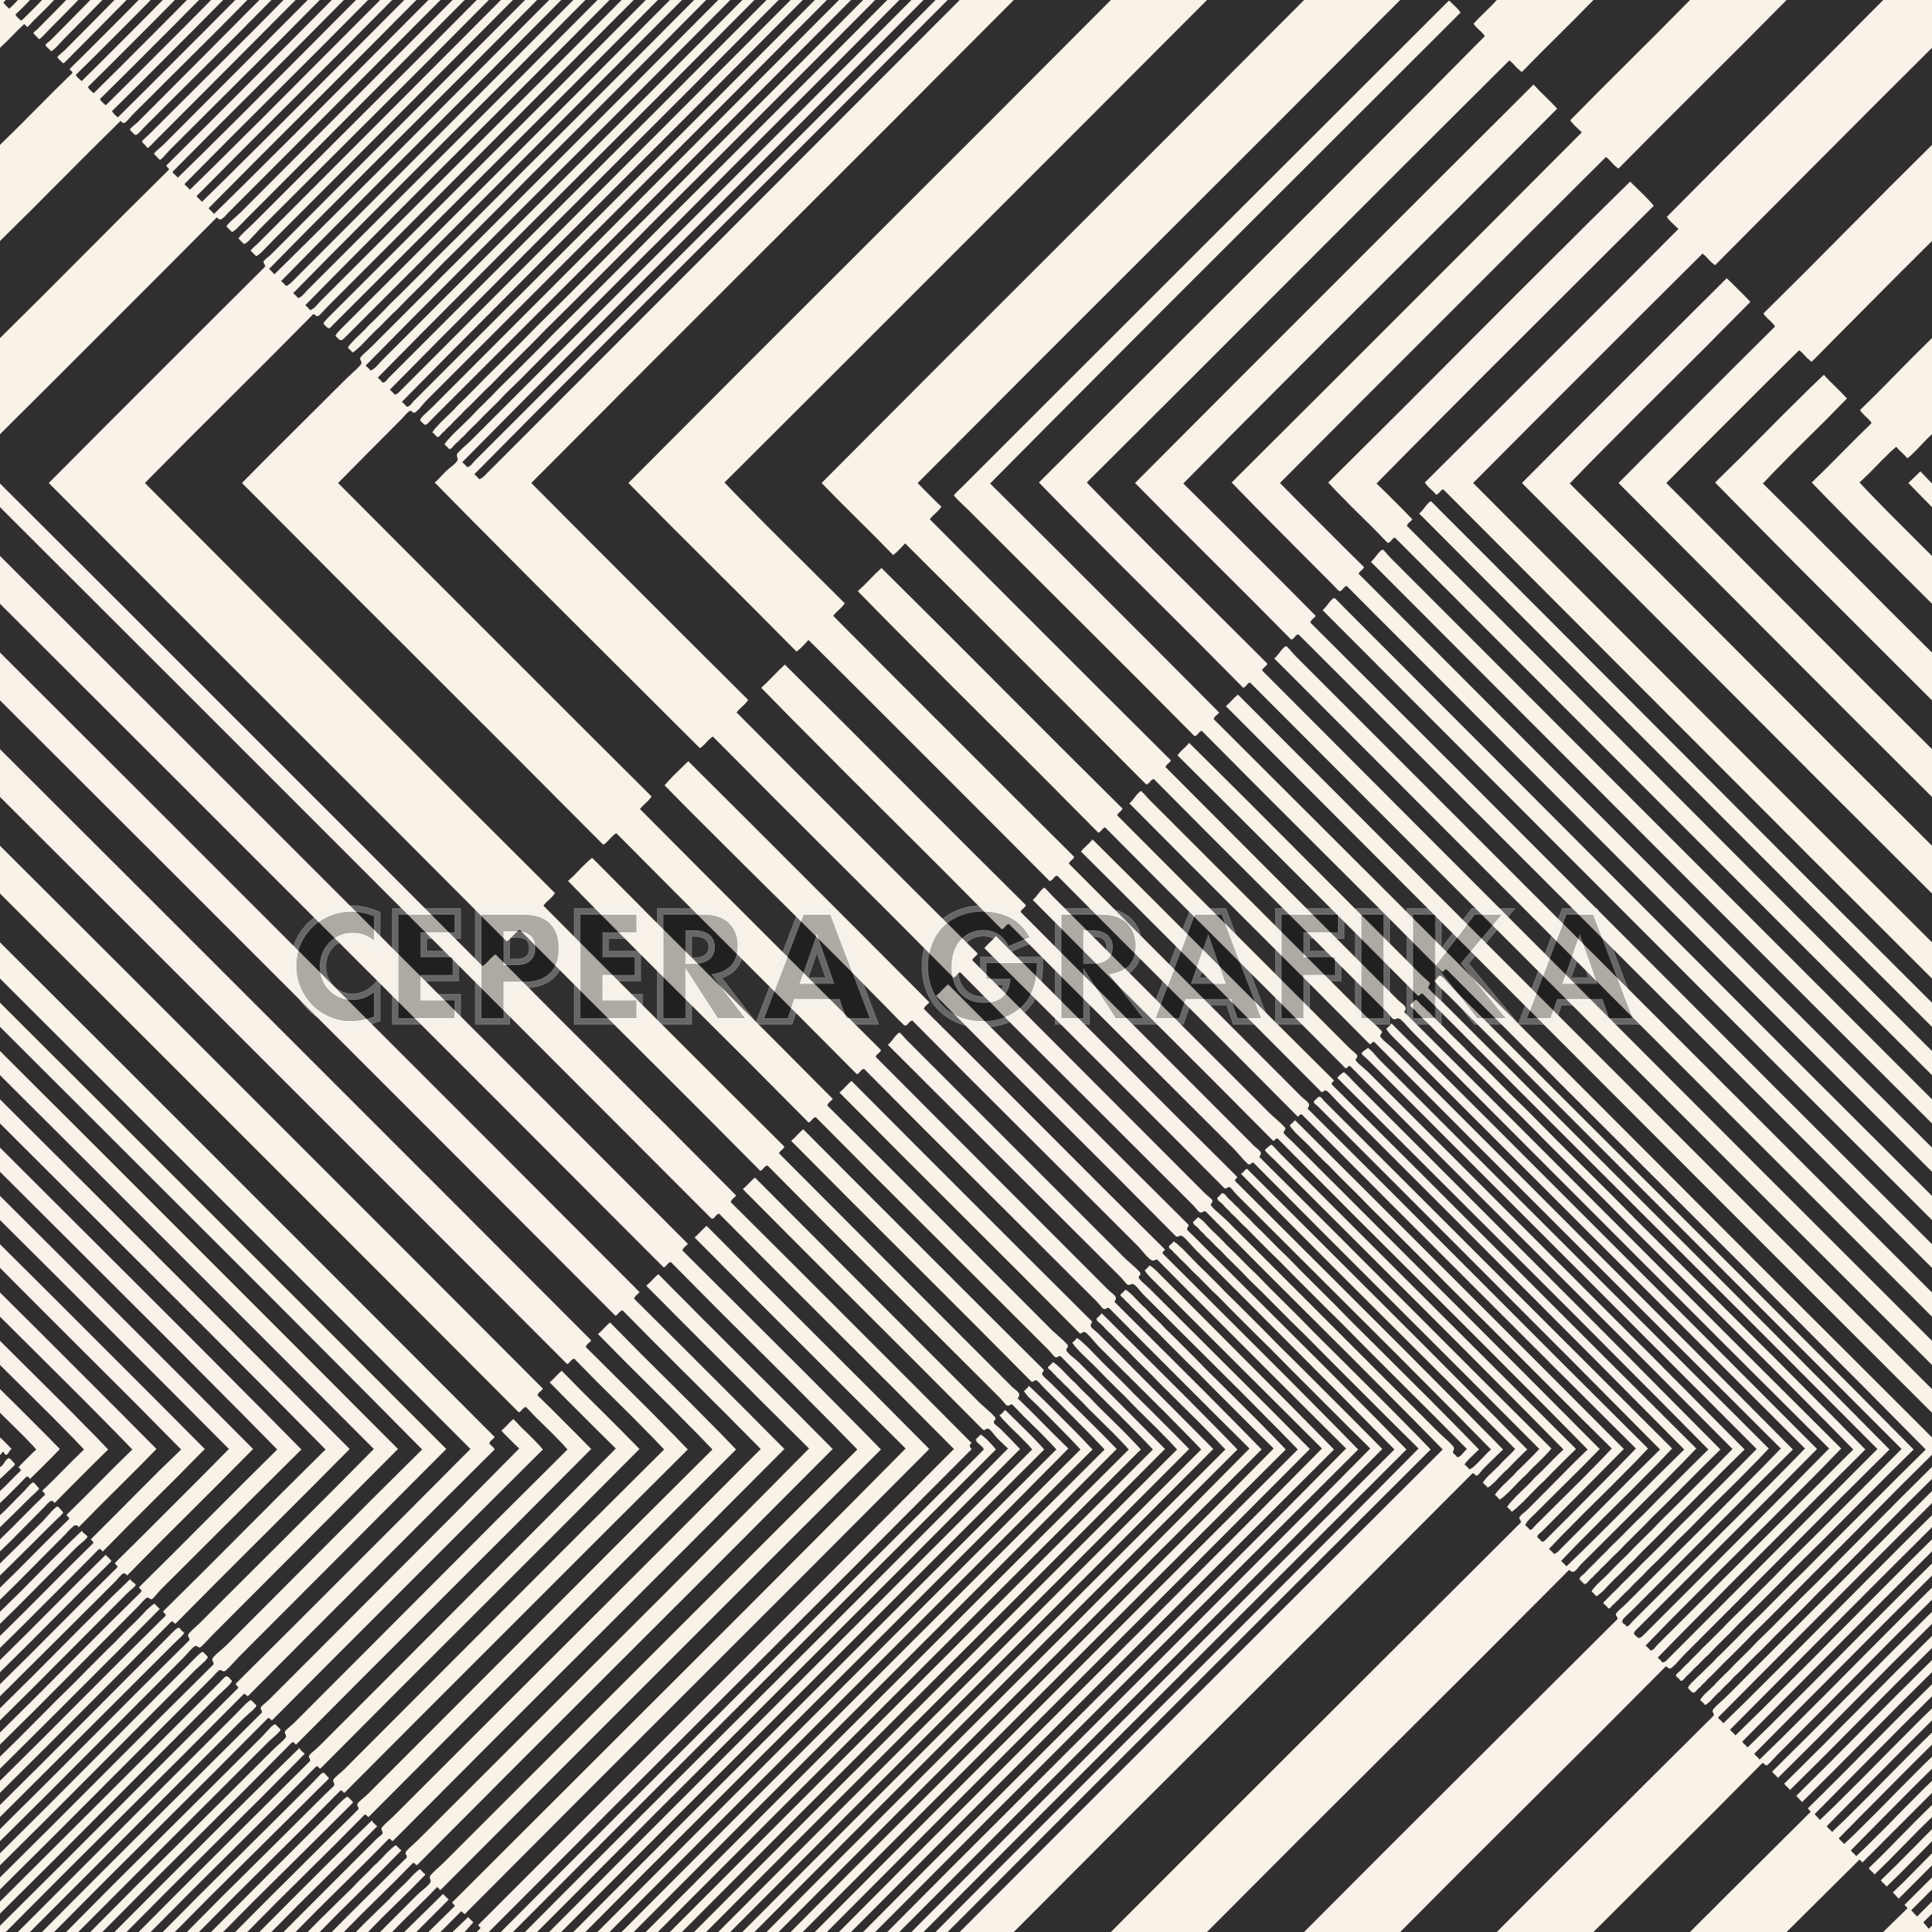 Monochrome Urban Striped Geometric Pattern